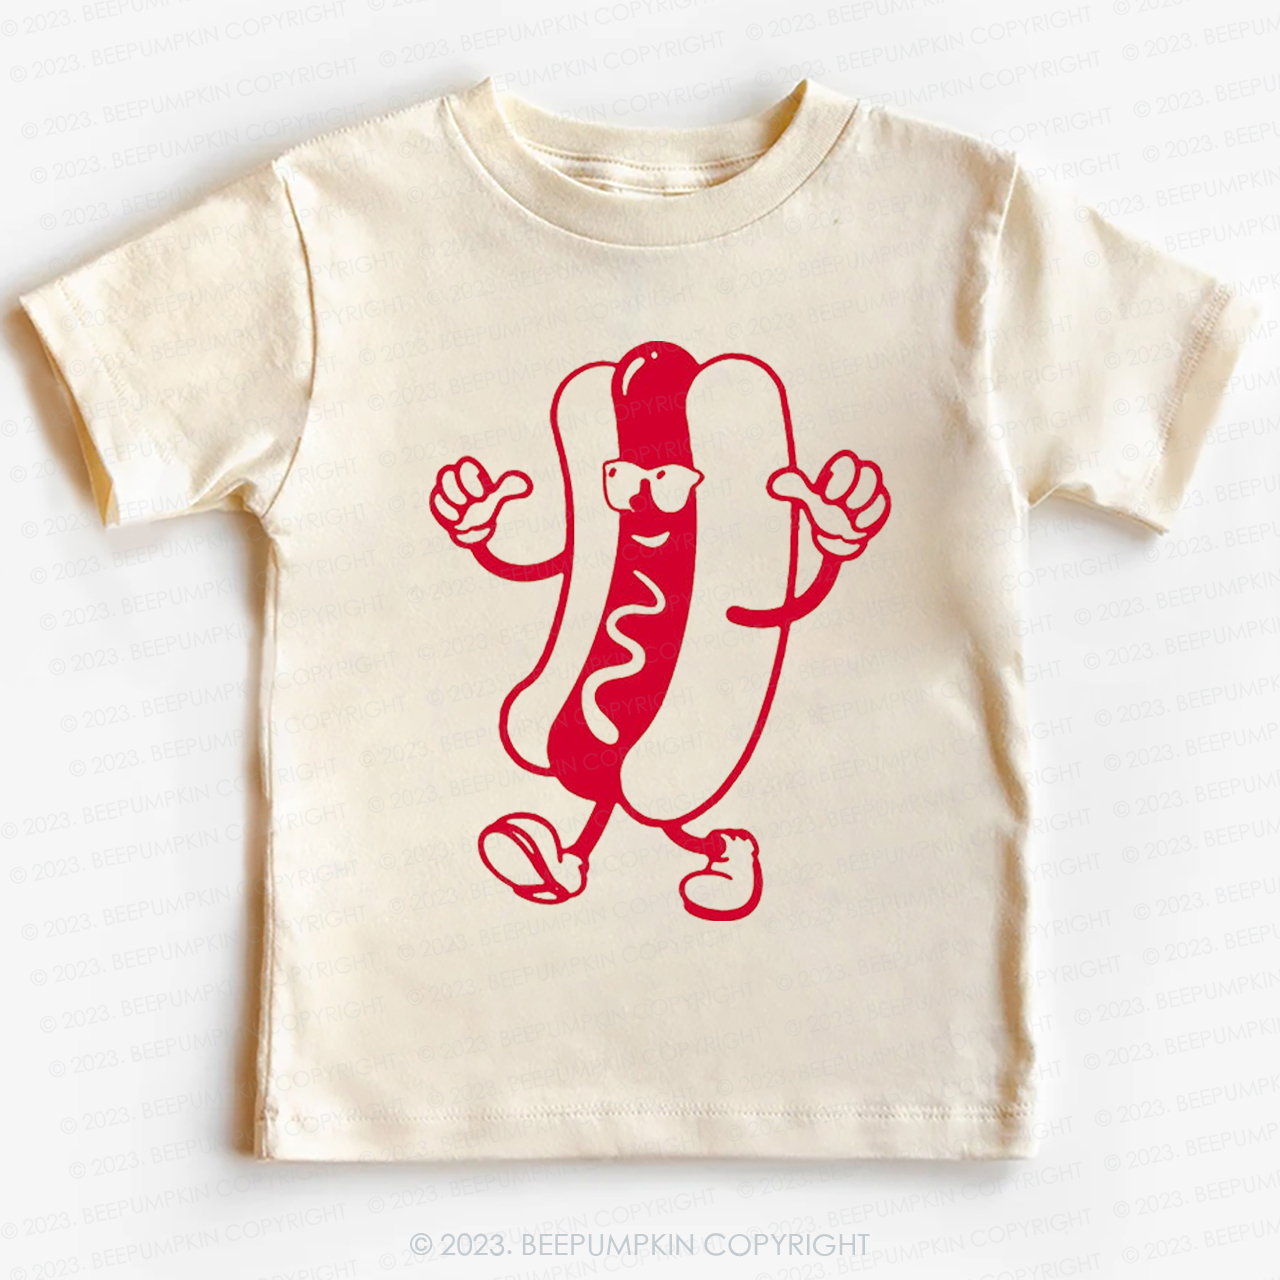 Cool Hot Dog Graphic Kids Shirt